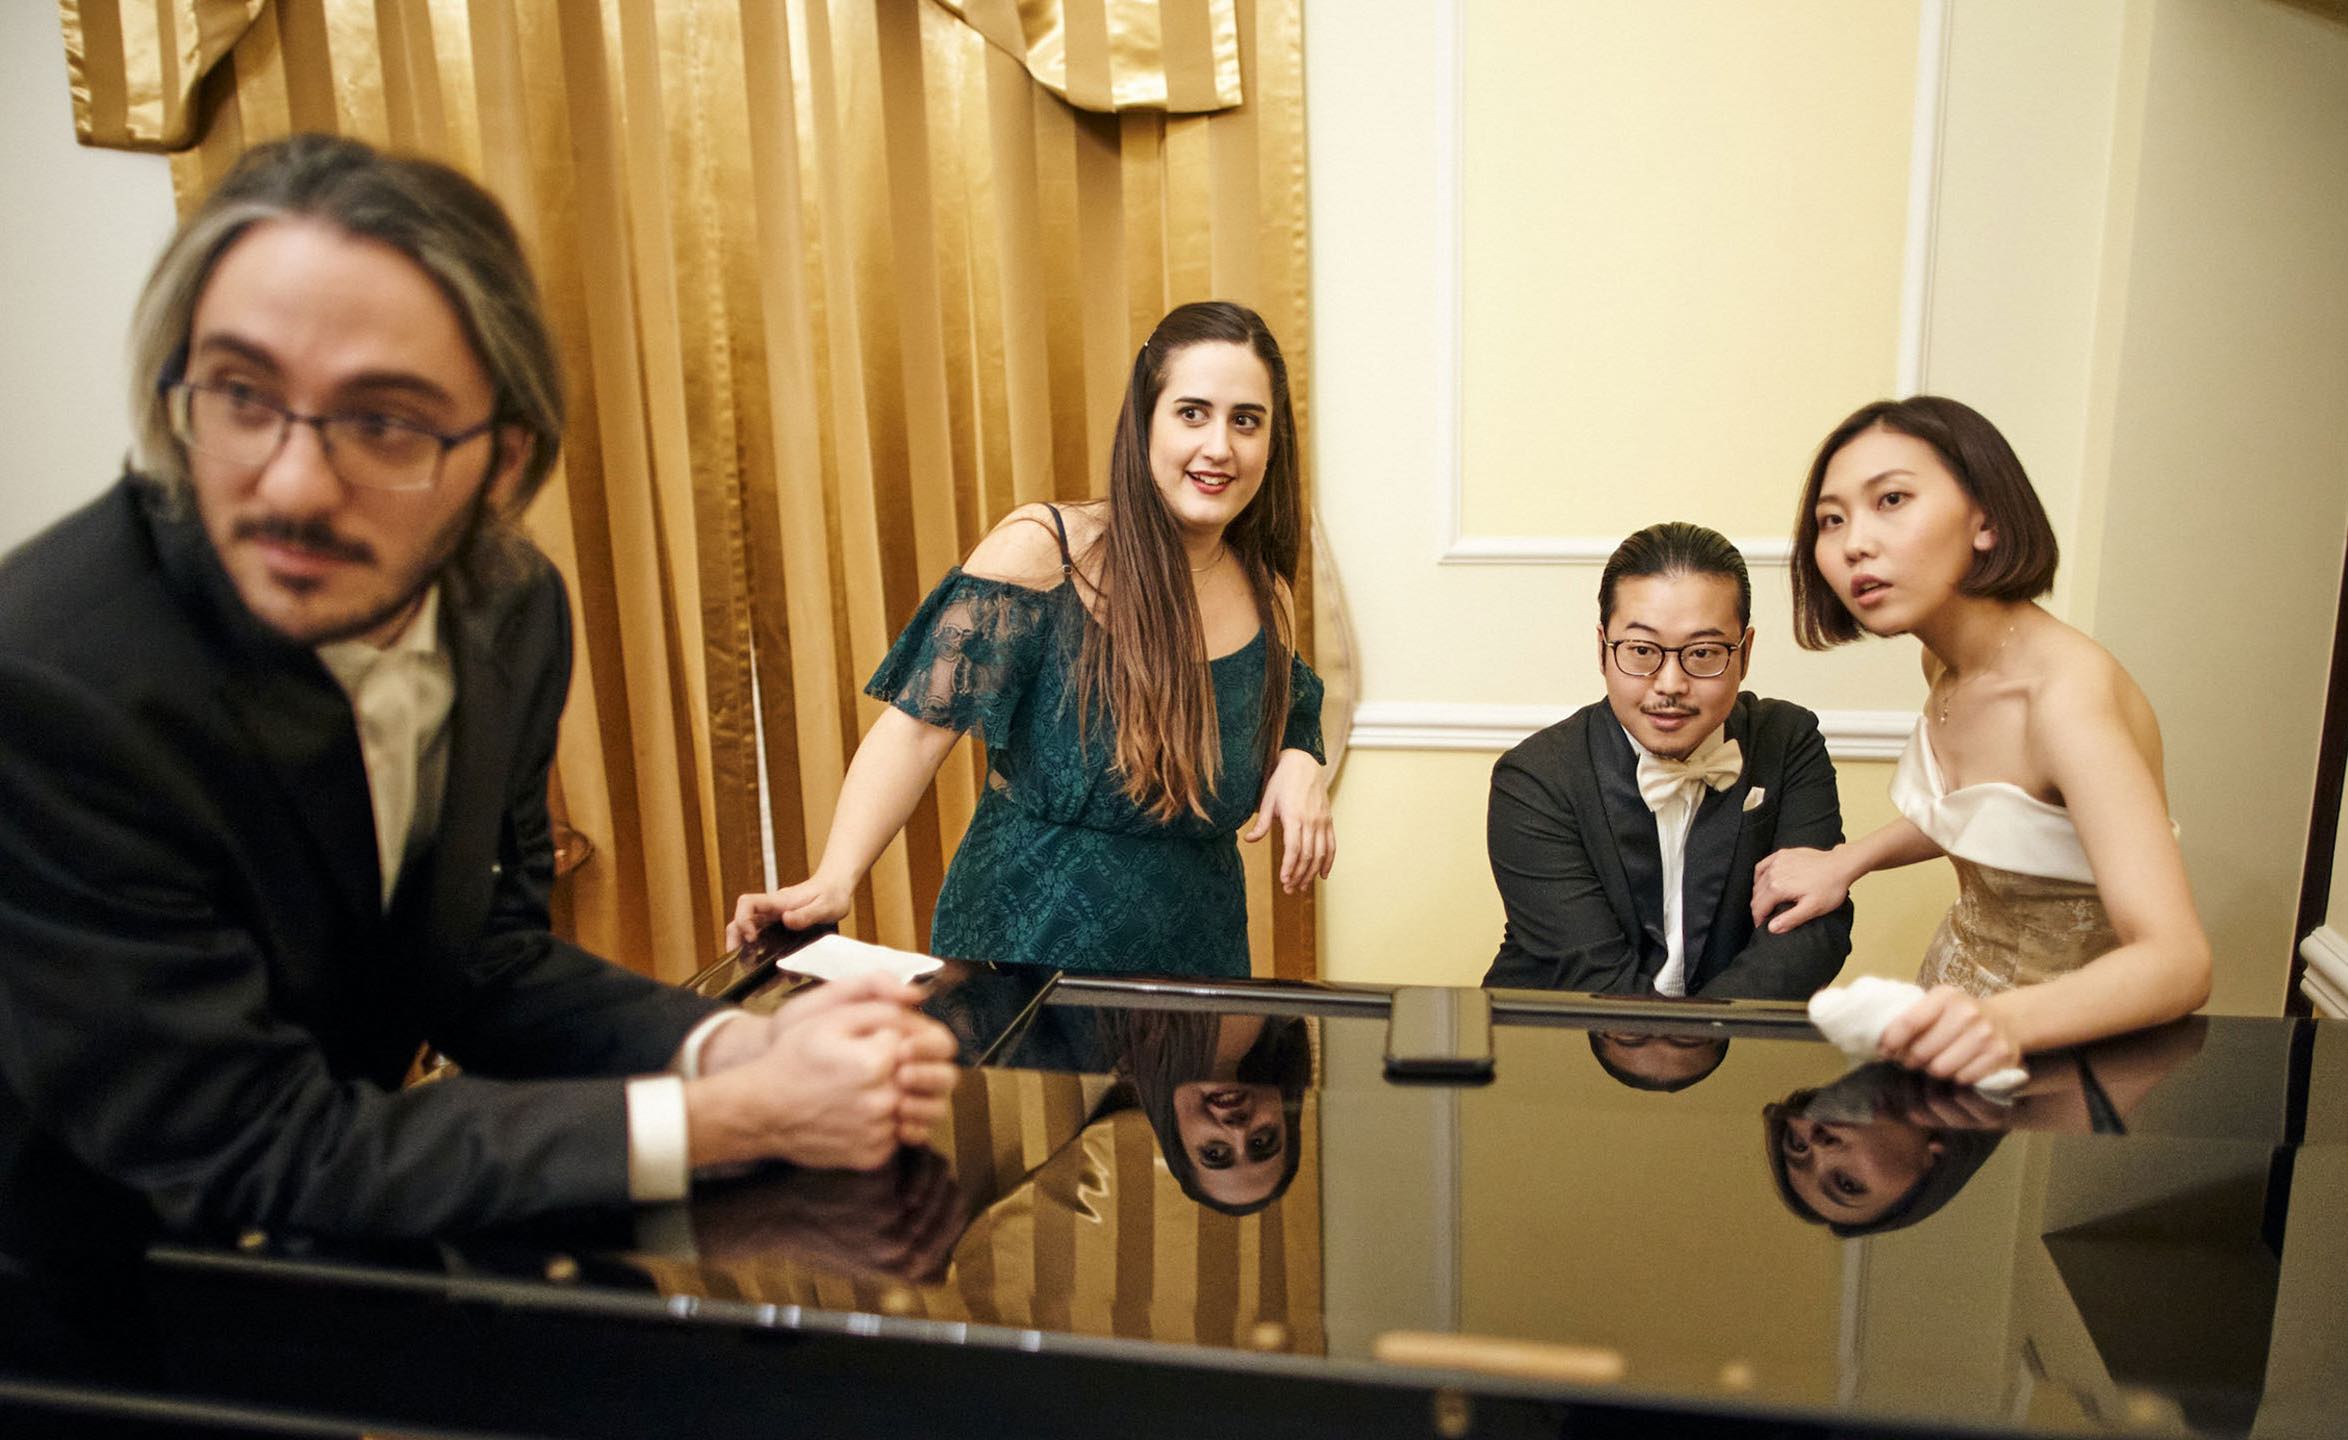 Gadjiev, Armellini, Kyohei Sorita and Aimi Kobayashi gauge the applause in "Pianoforte" / Photo by Darek Golik, courtesy of the Sundance Institute